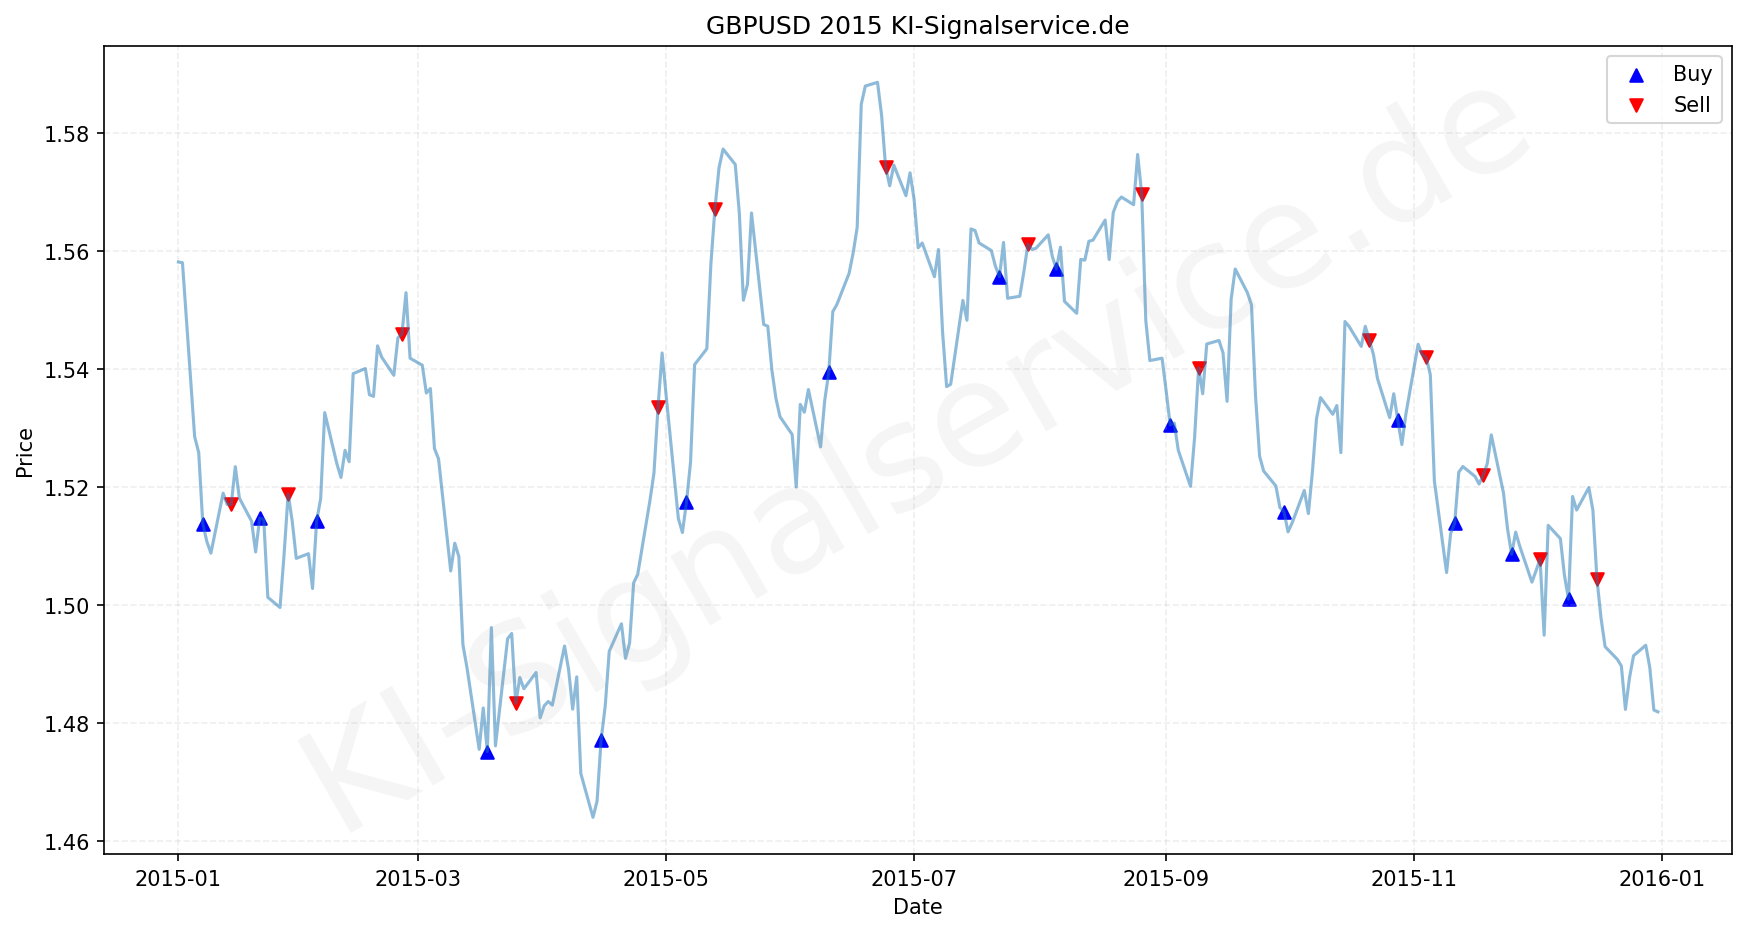 GBPUSD Chart - KI Tradingsignale 2015